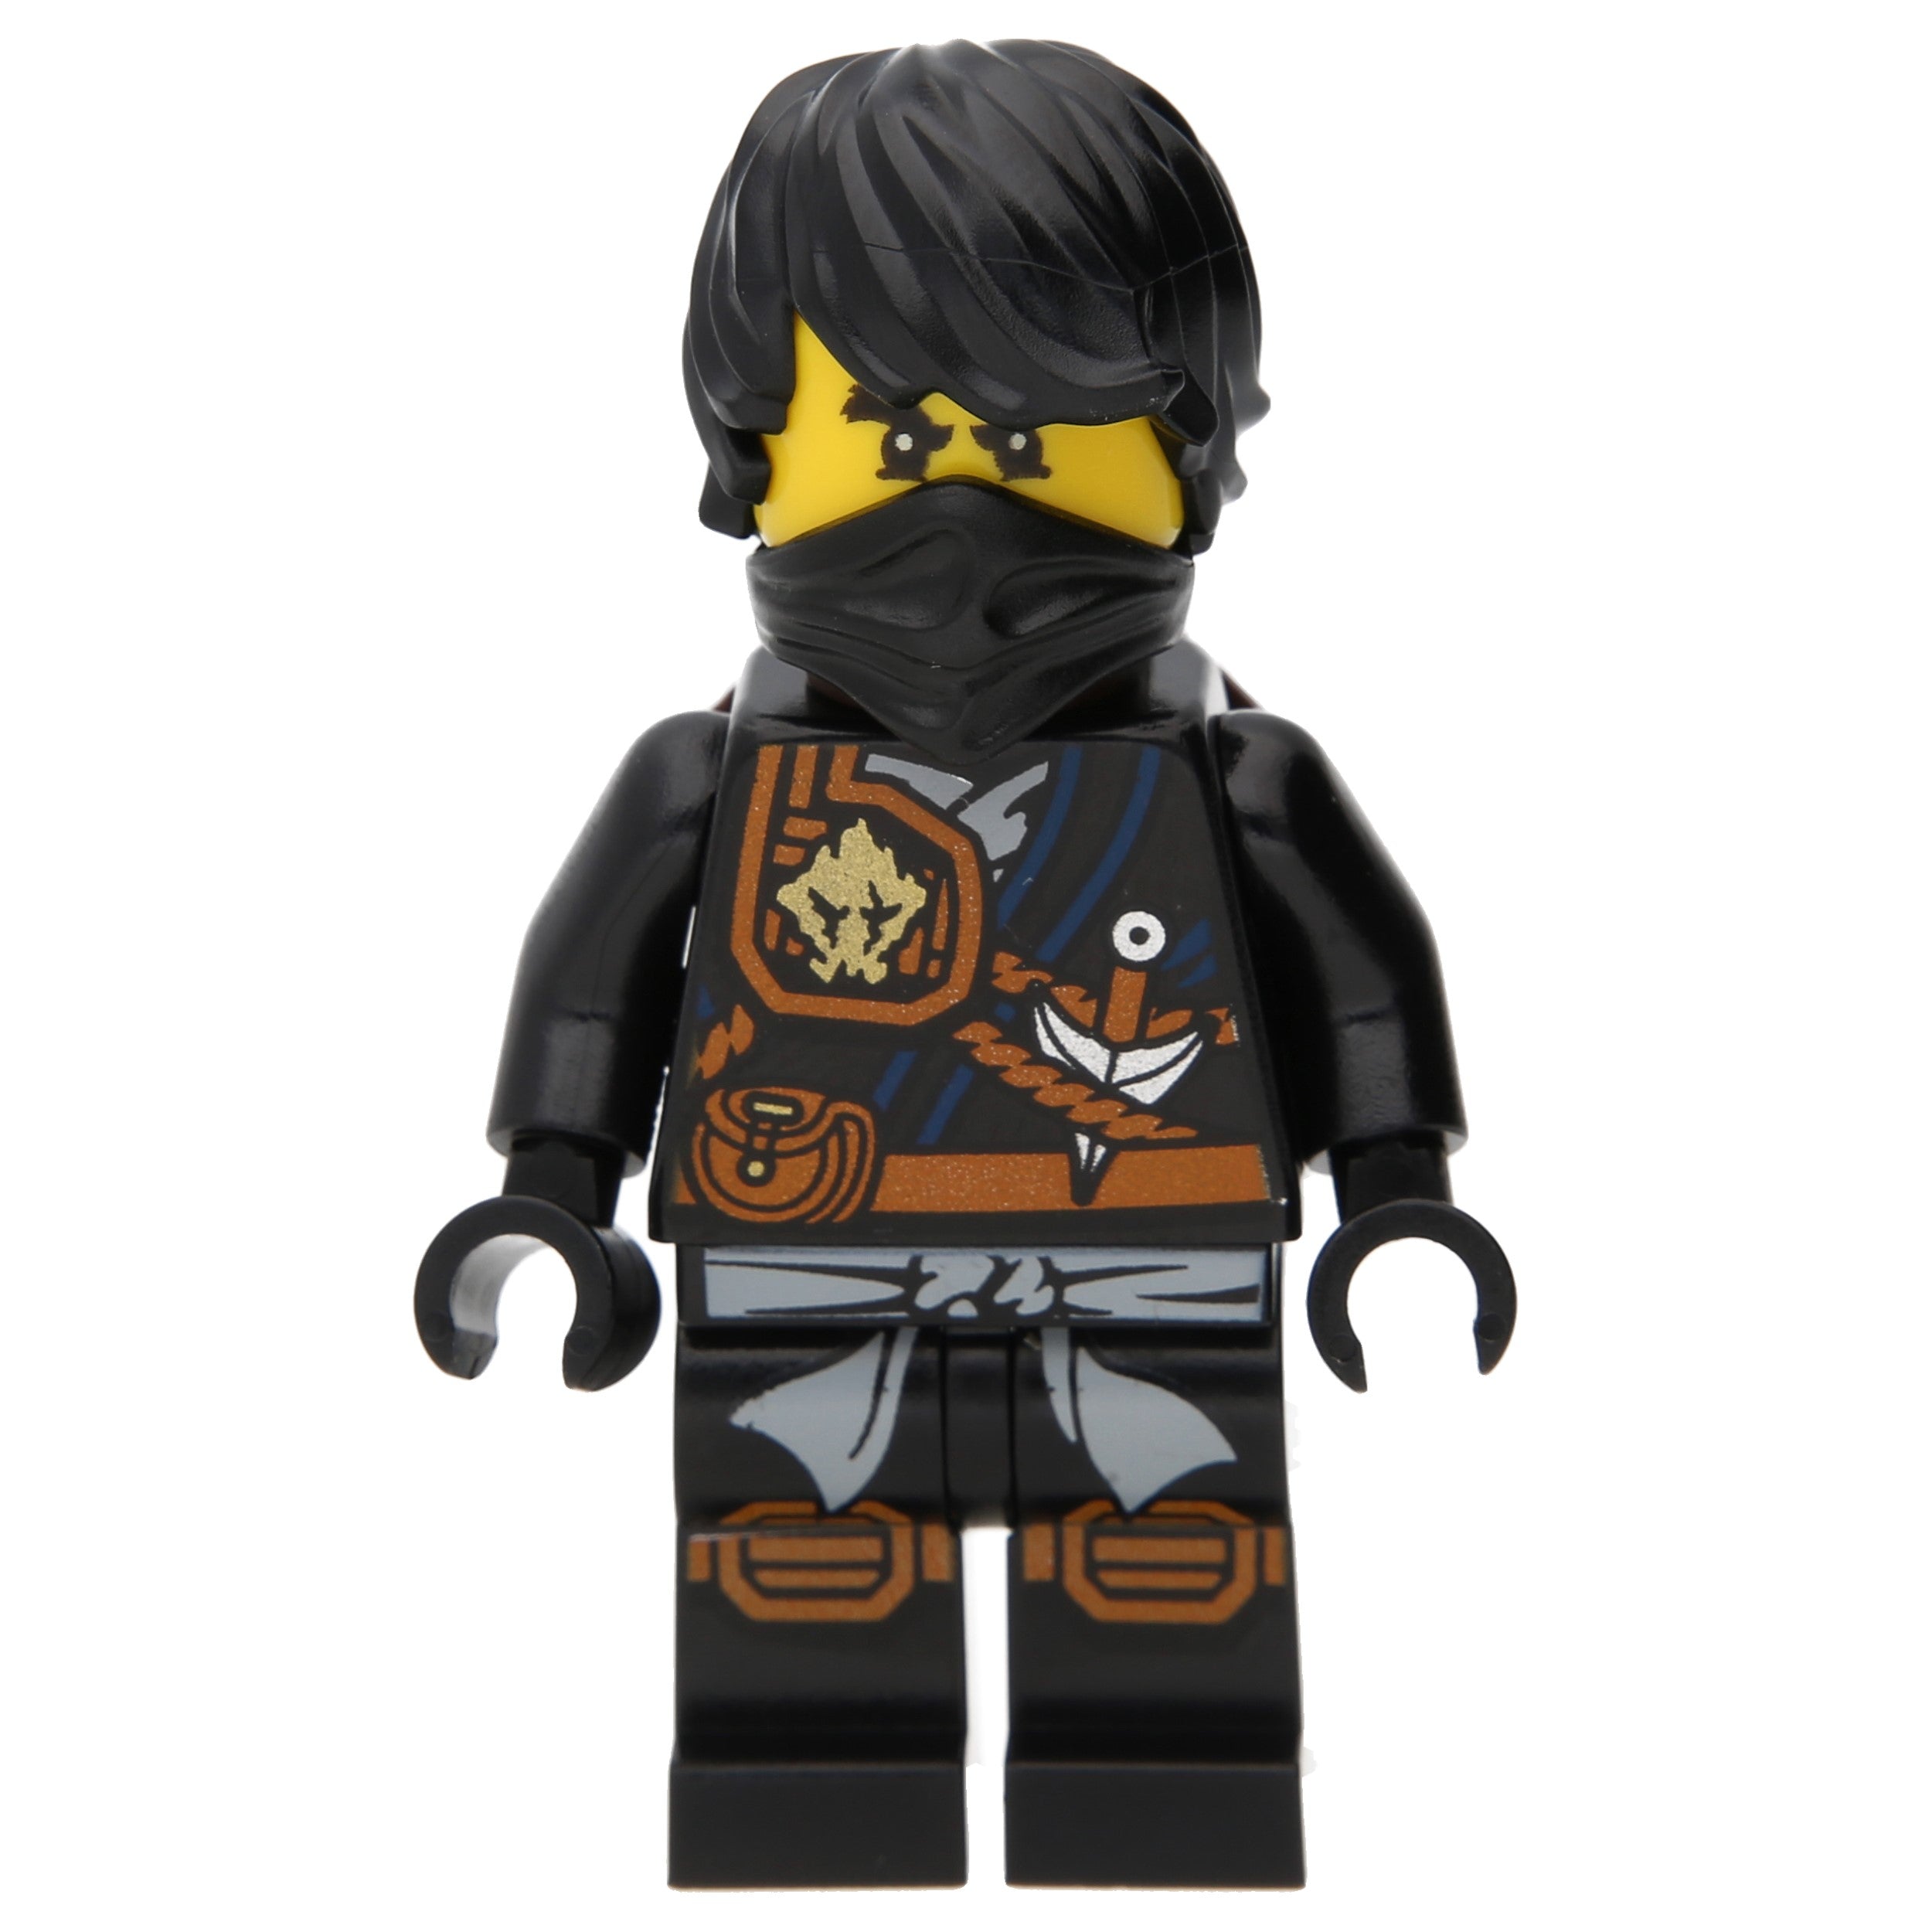 LEGO Ninjago Minifigures - Cole with knee pads and swords